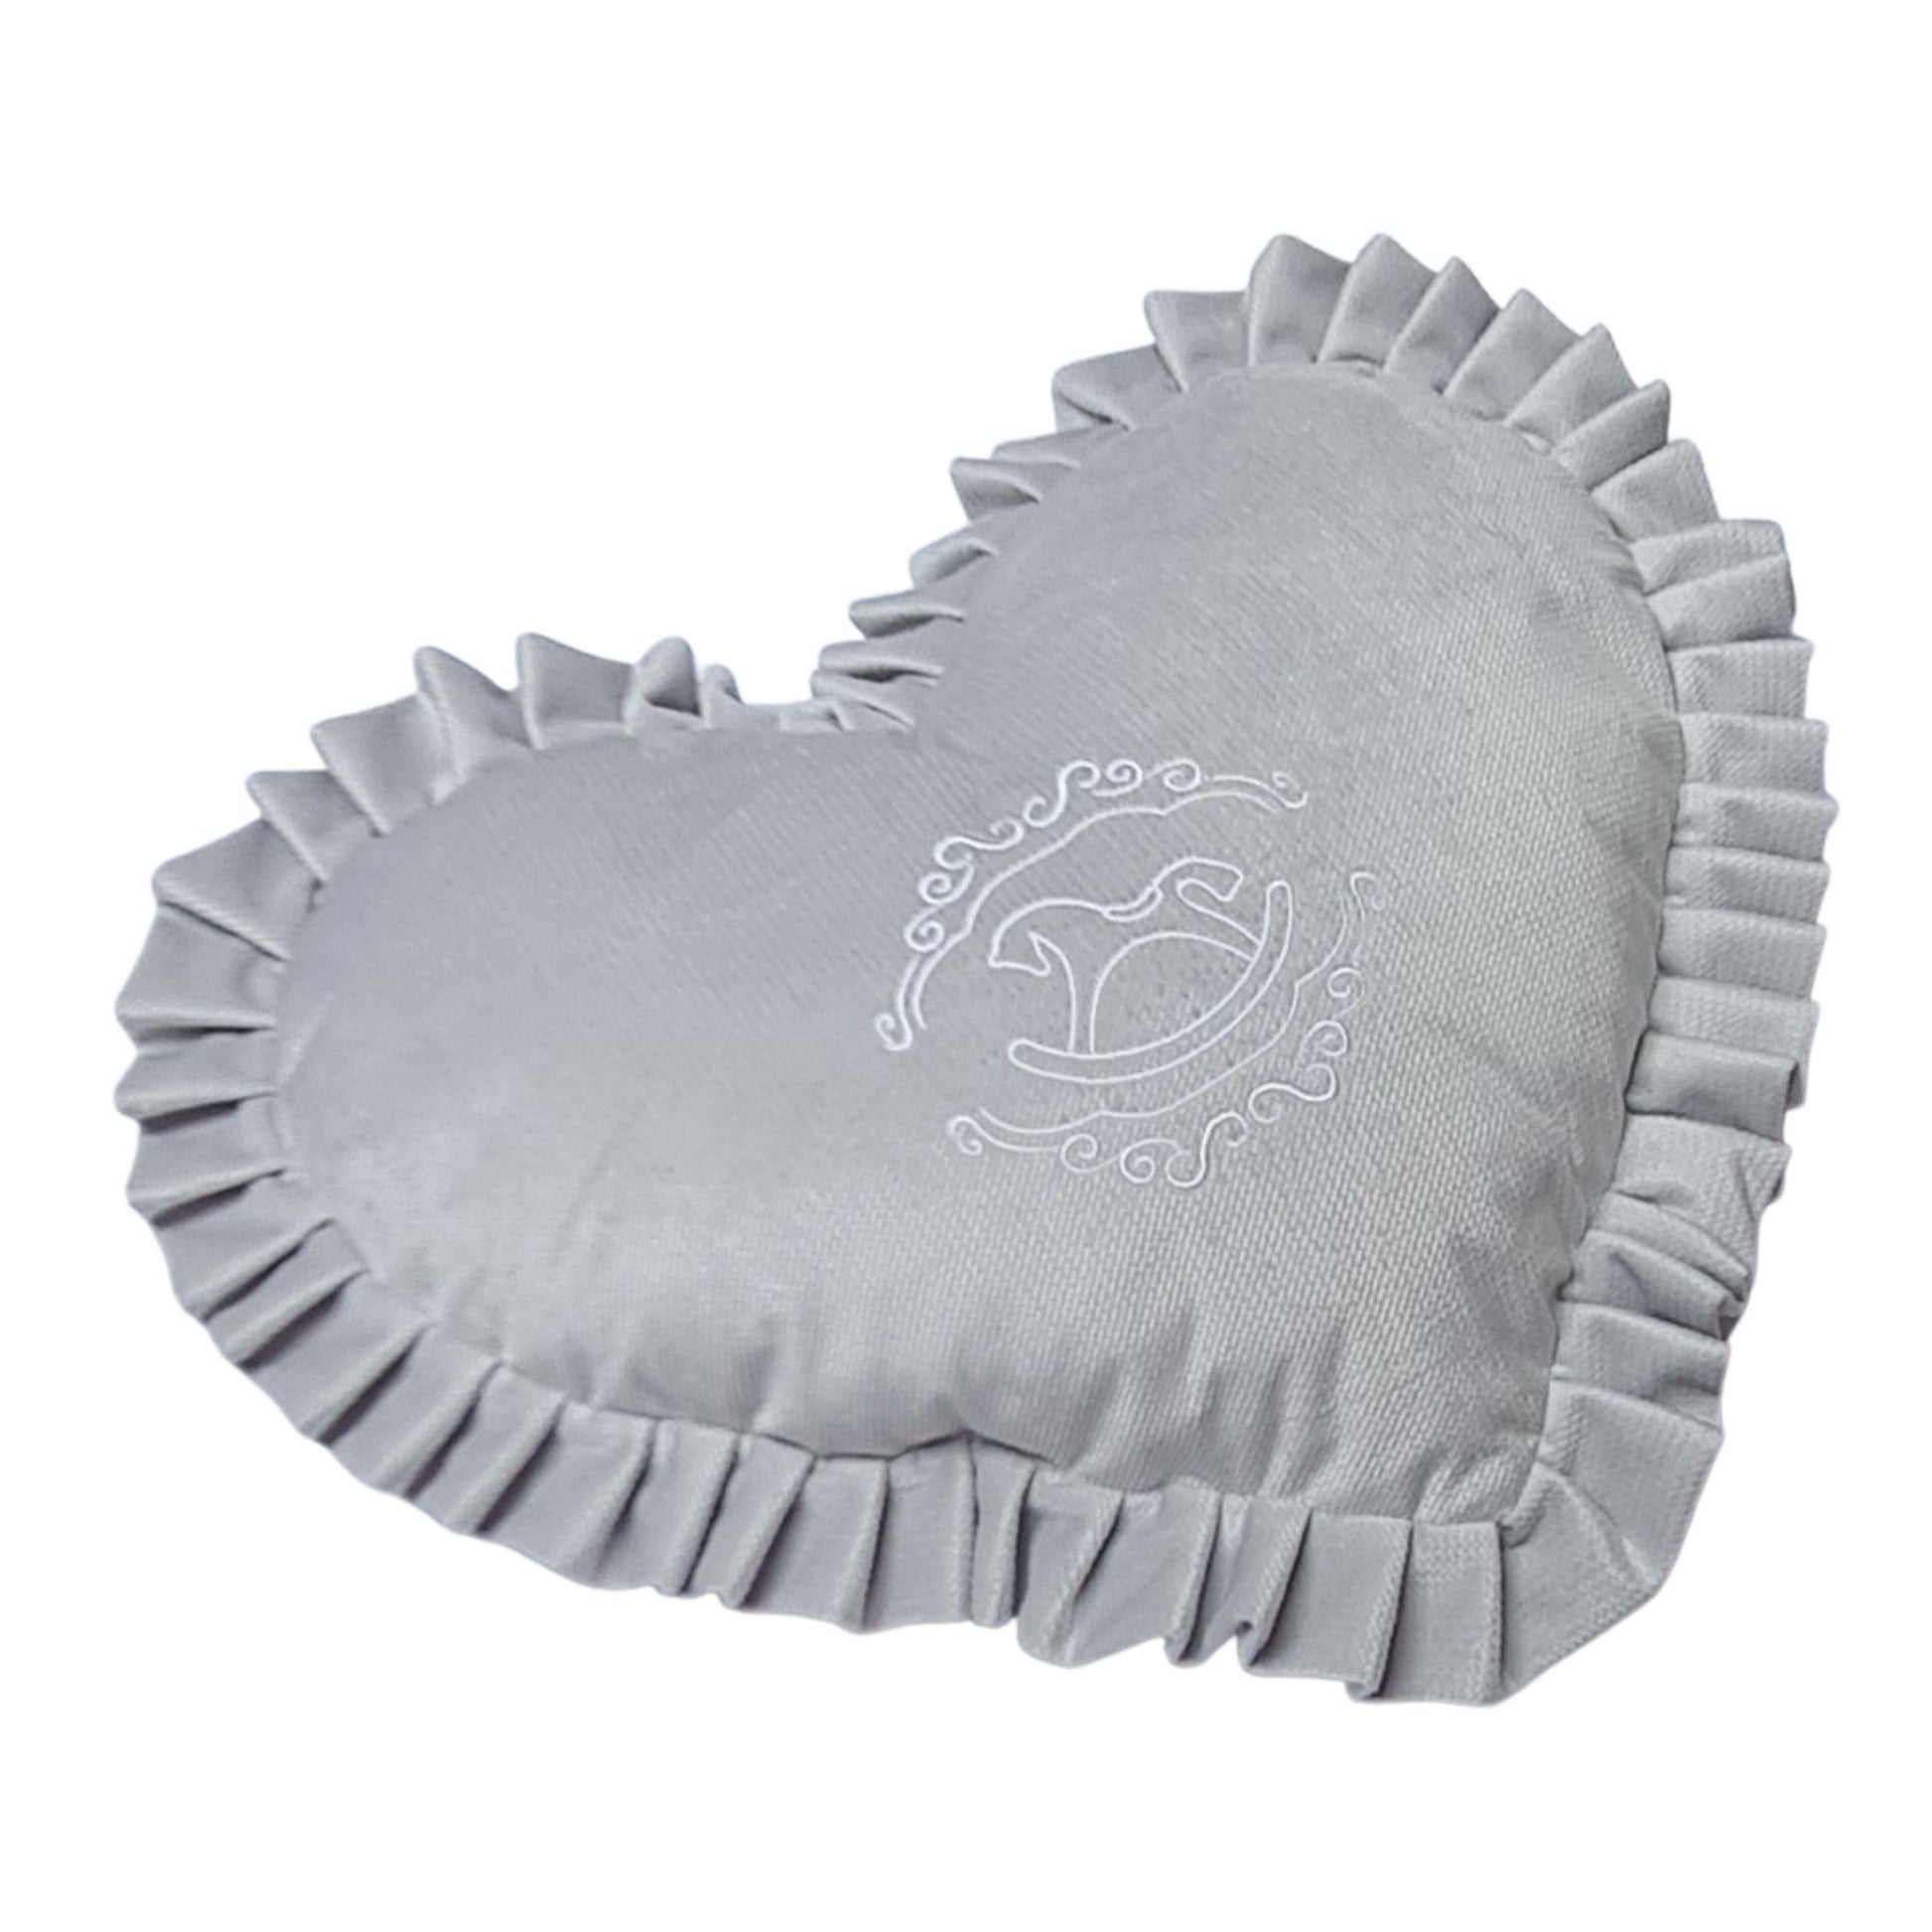 decorative pillow for baby room crib cot velvet grey pillow